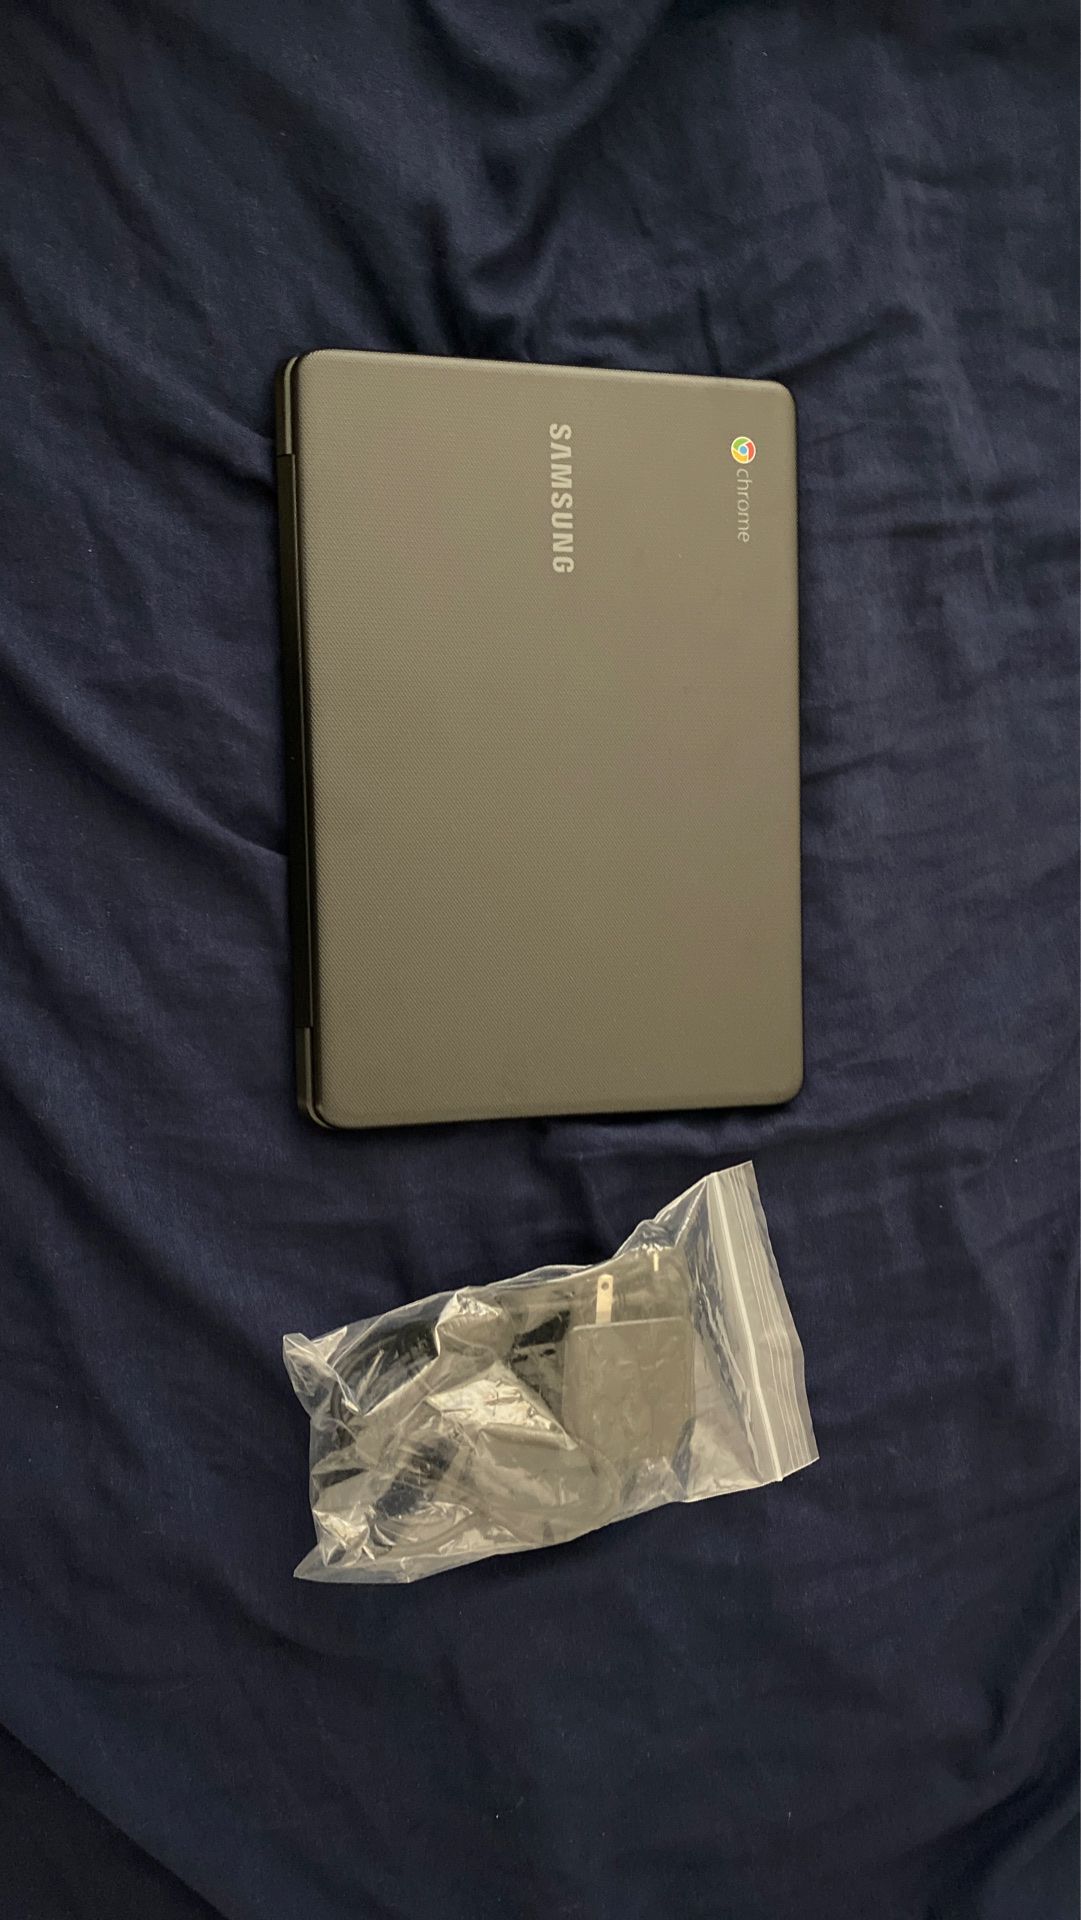 Samsung Chromebook 3 XE500C13-K01US